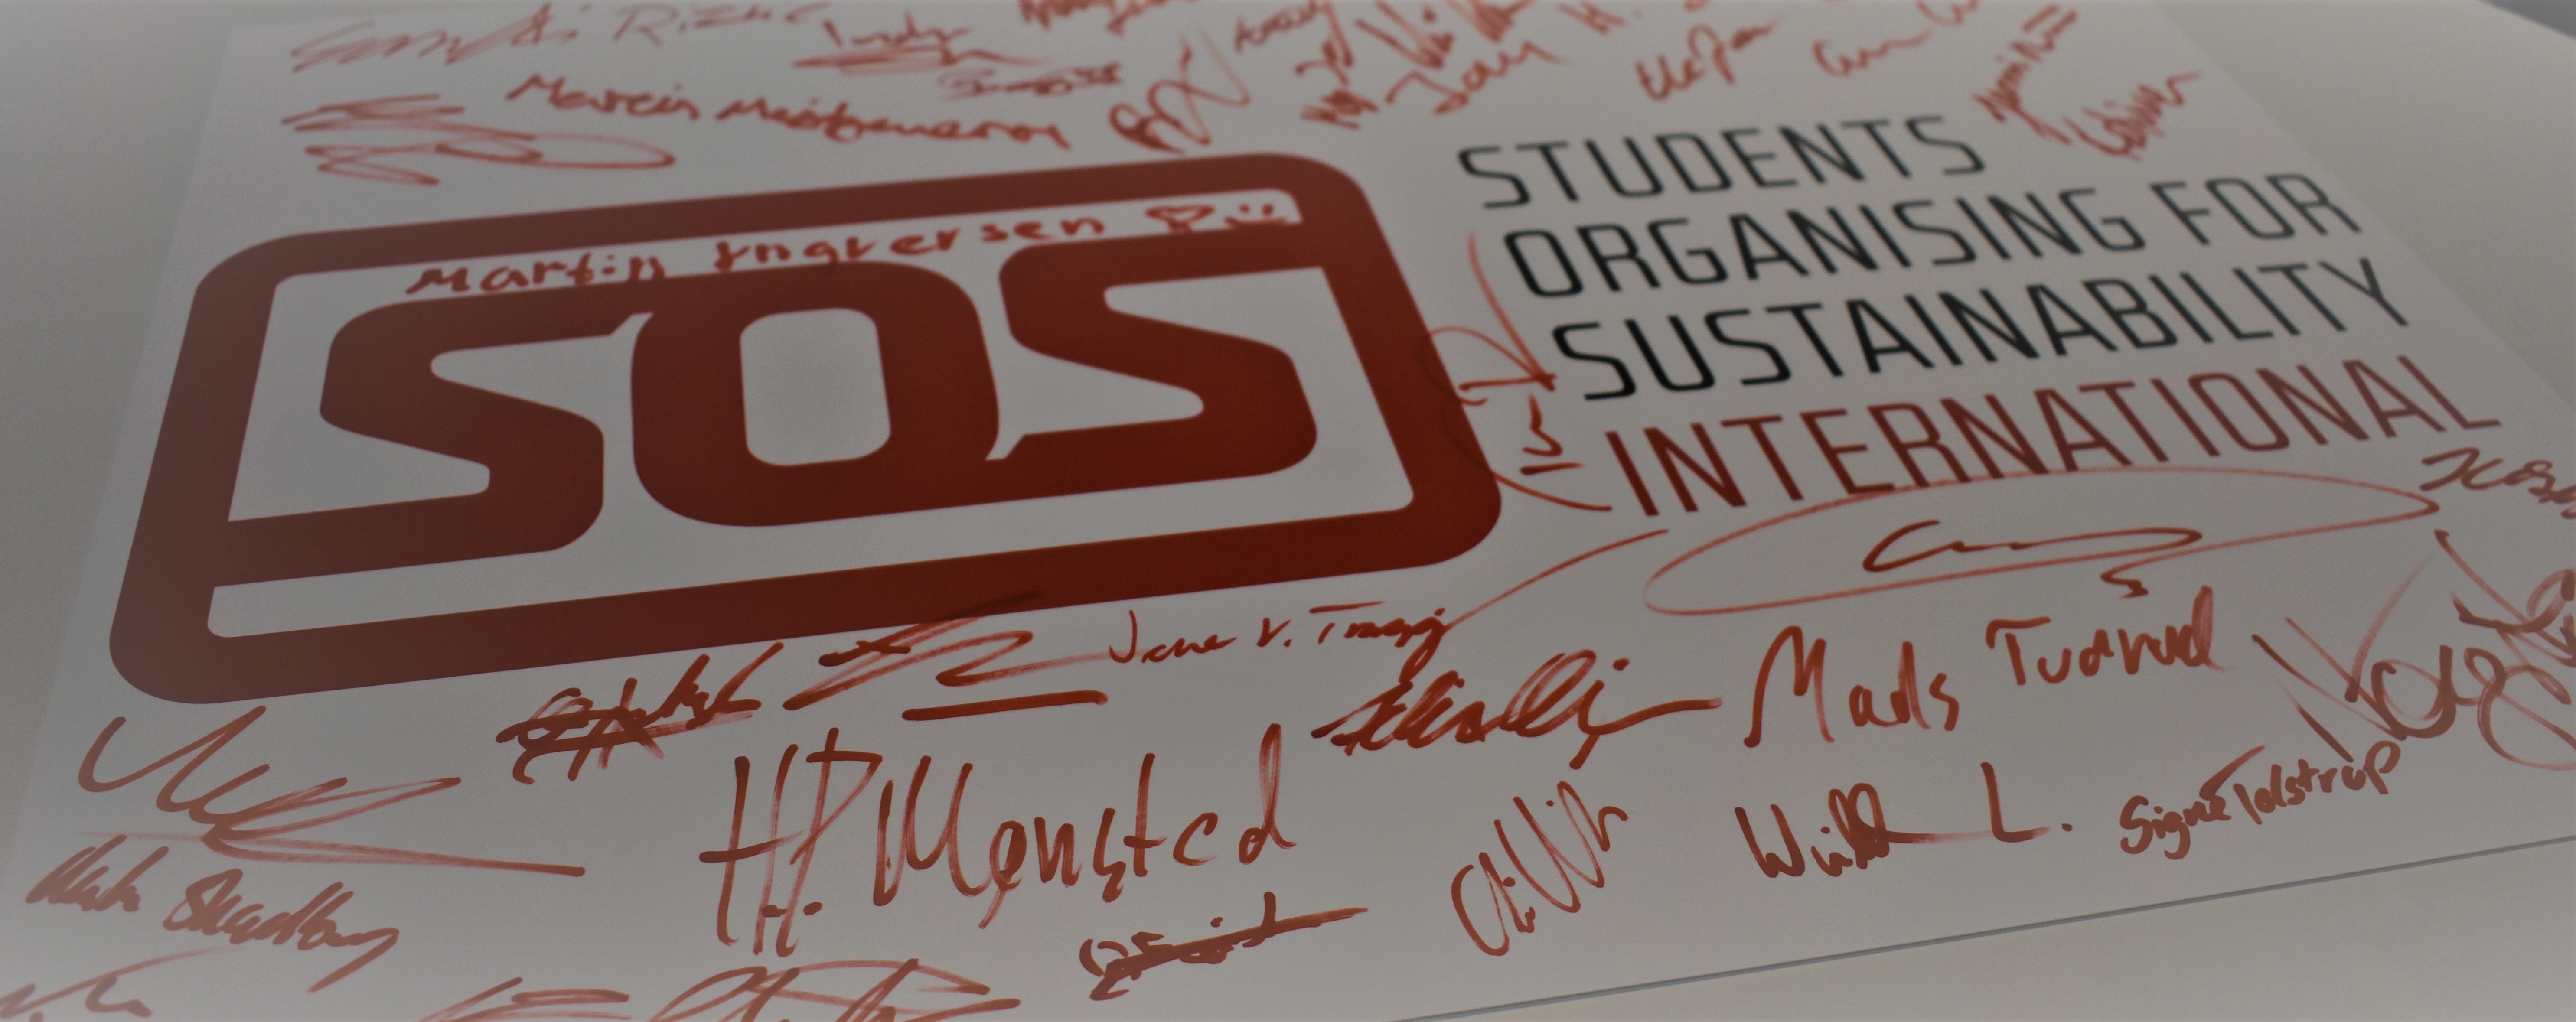 SOS logo signed